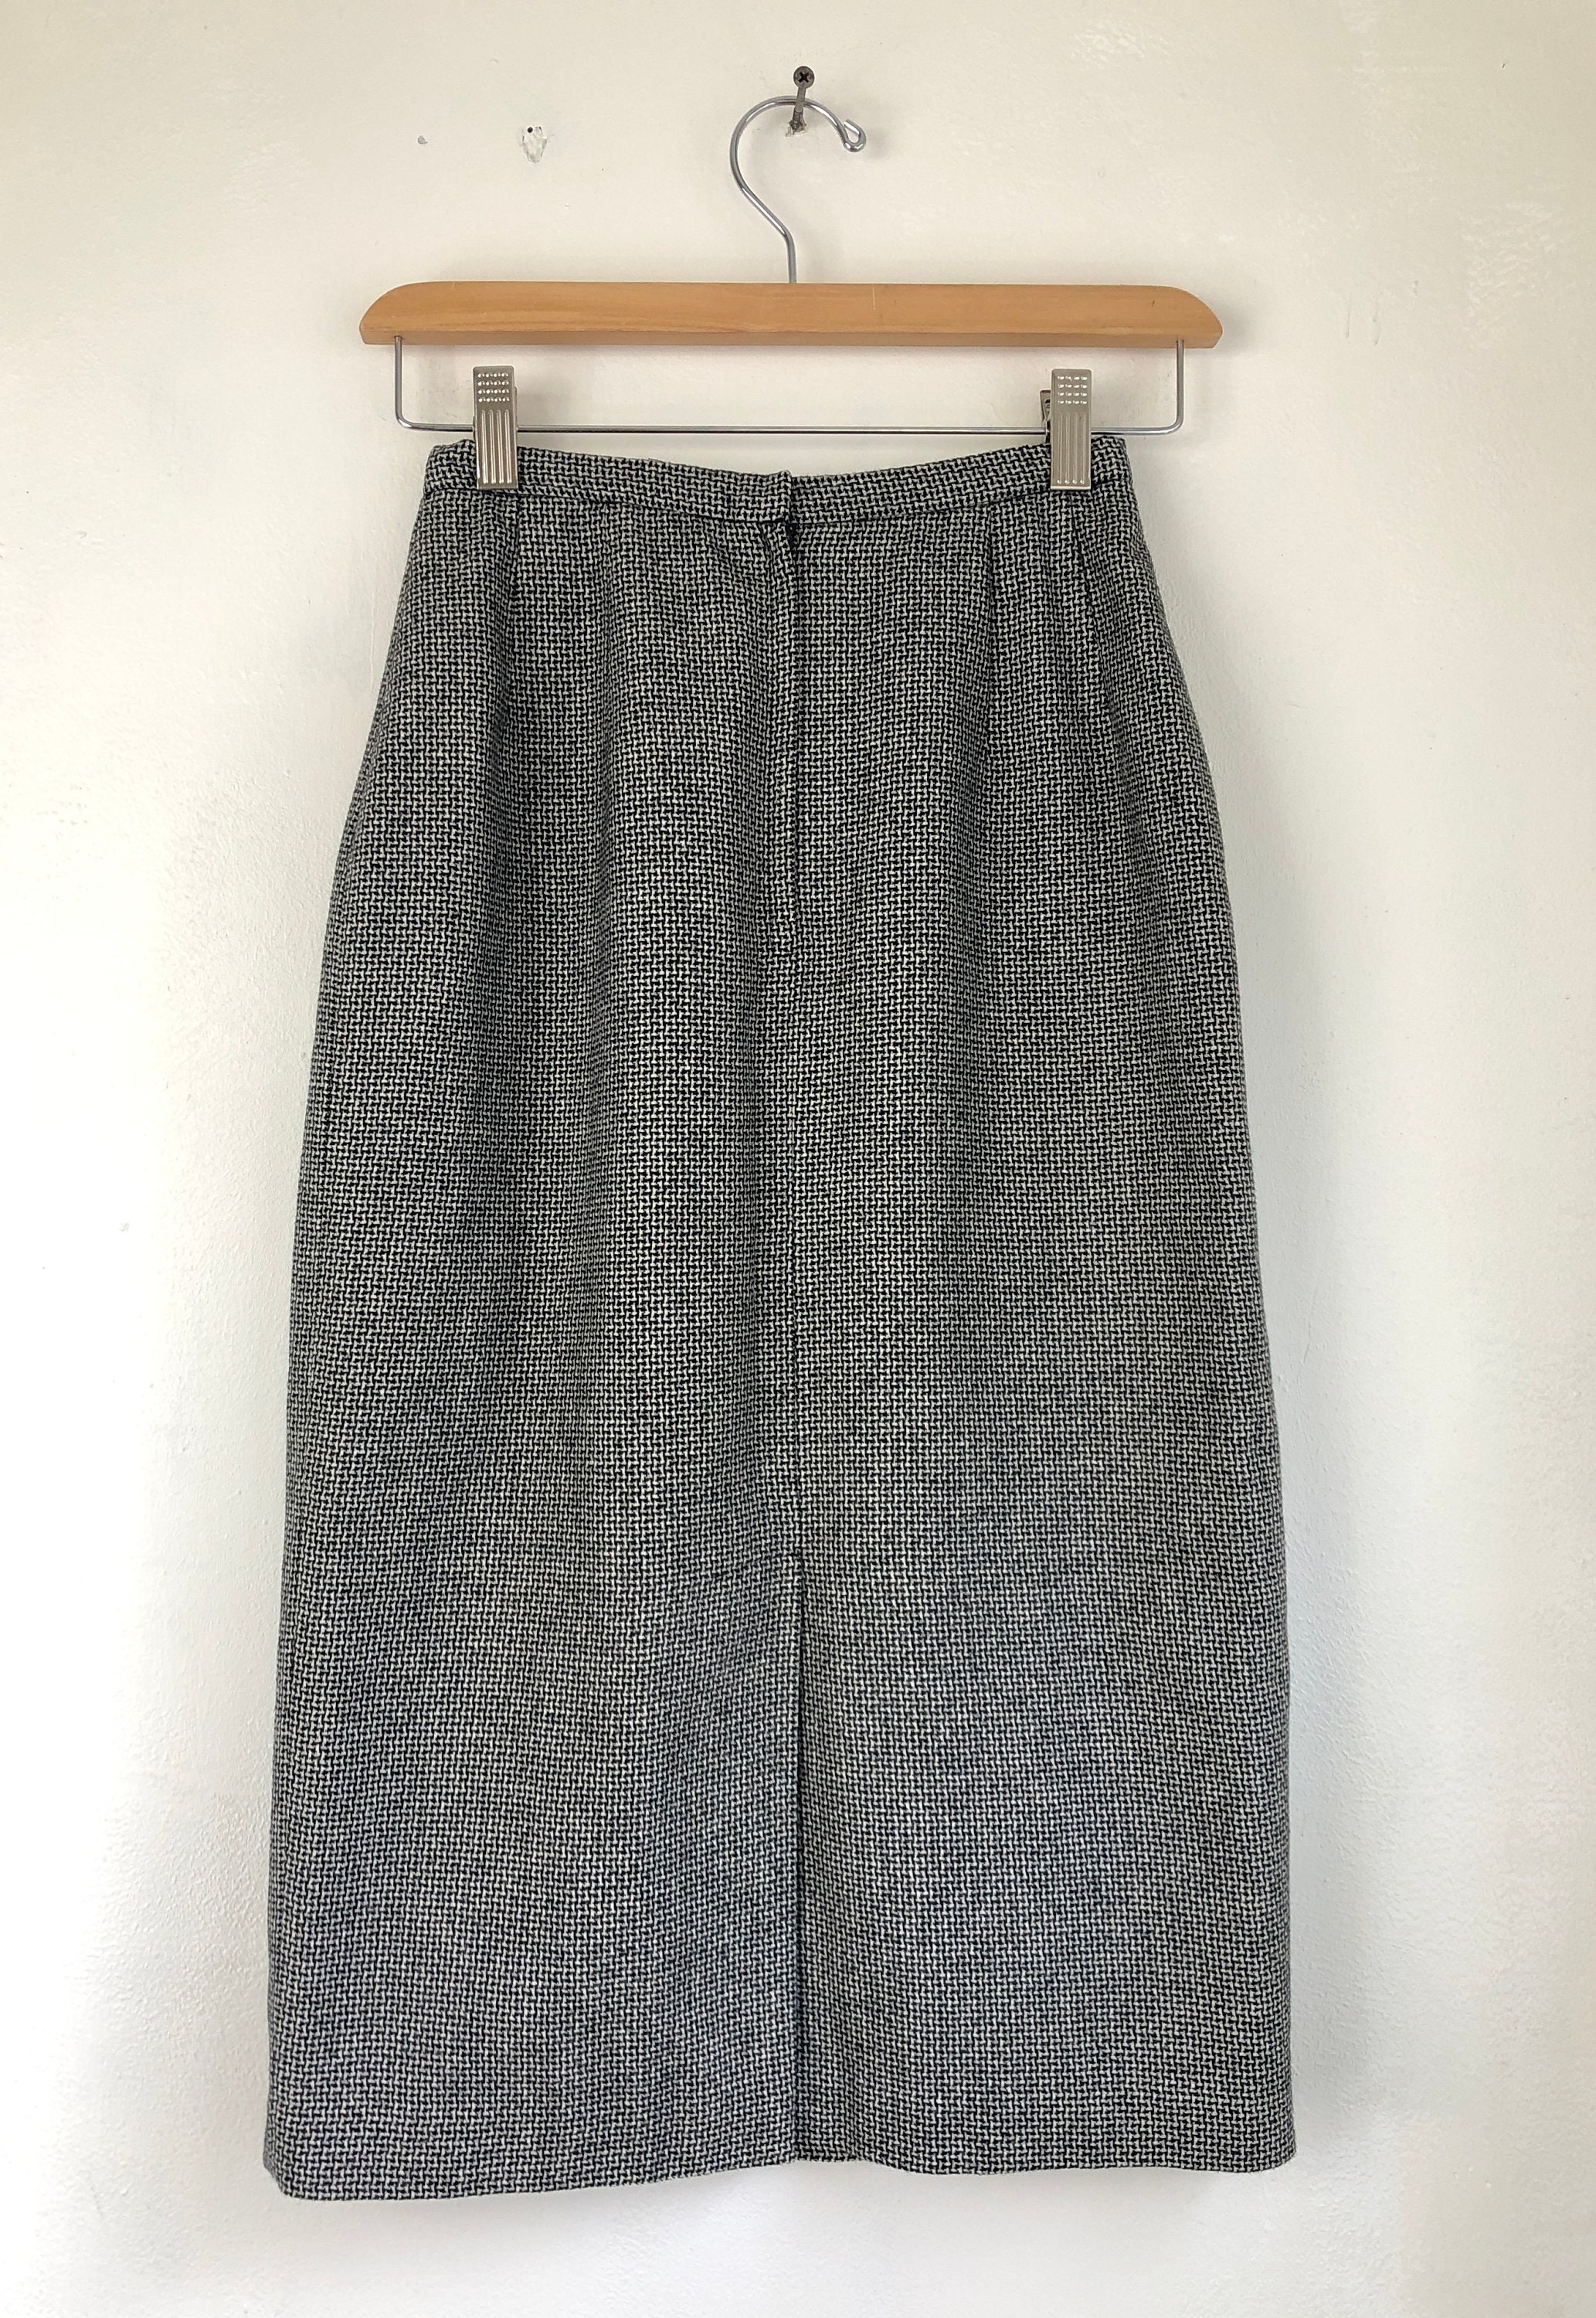 Vintage Wool Blend Skirt 80s Evan Picone Designer | Etsy